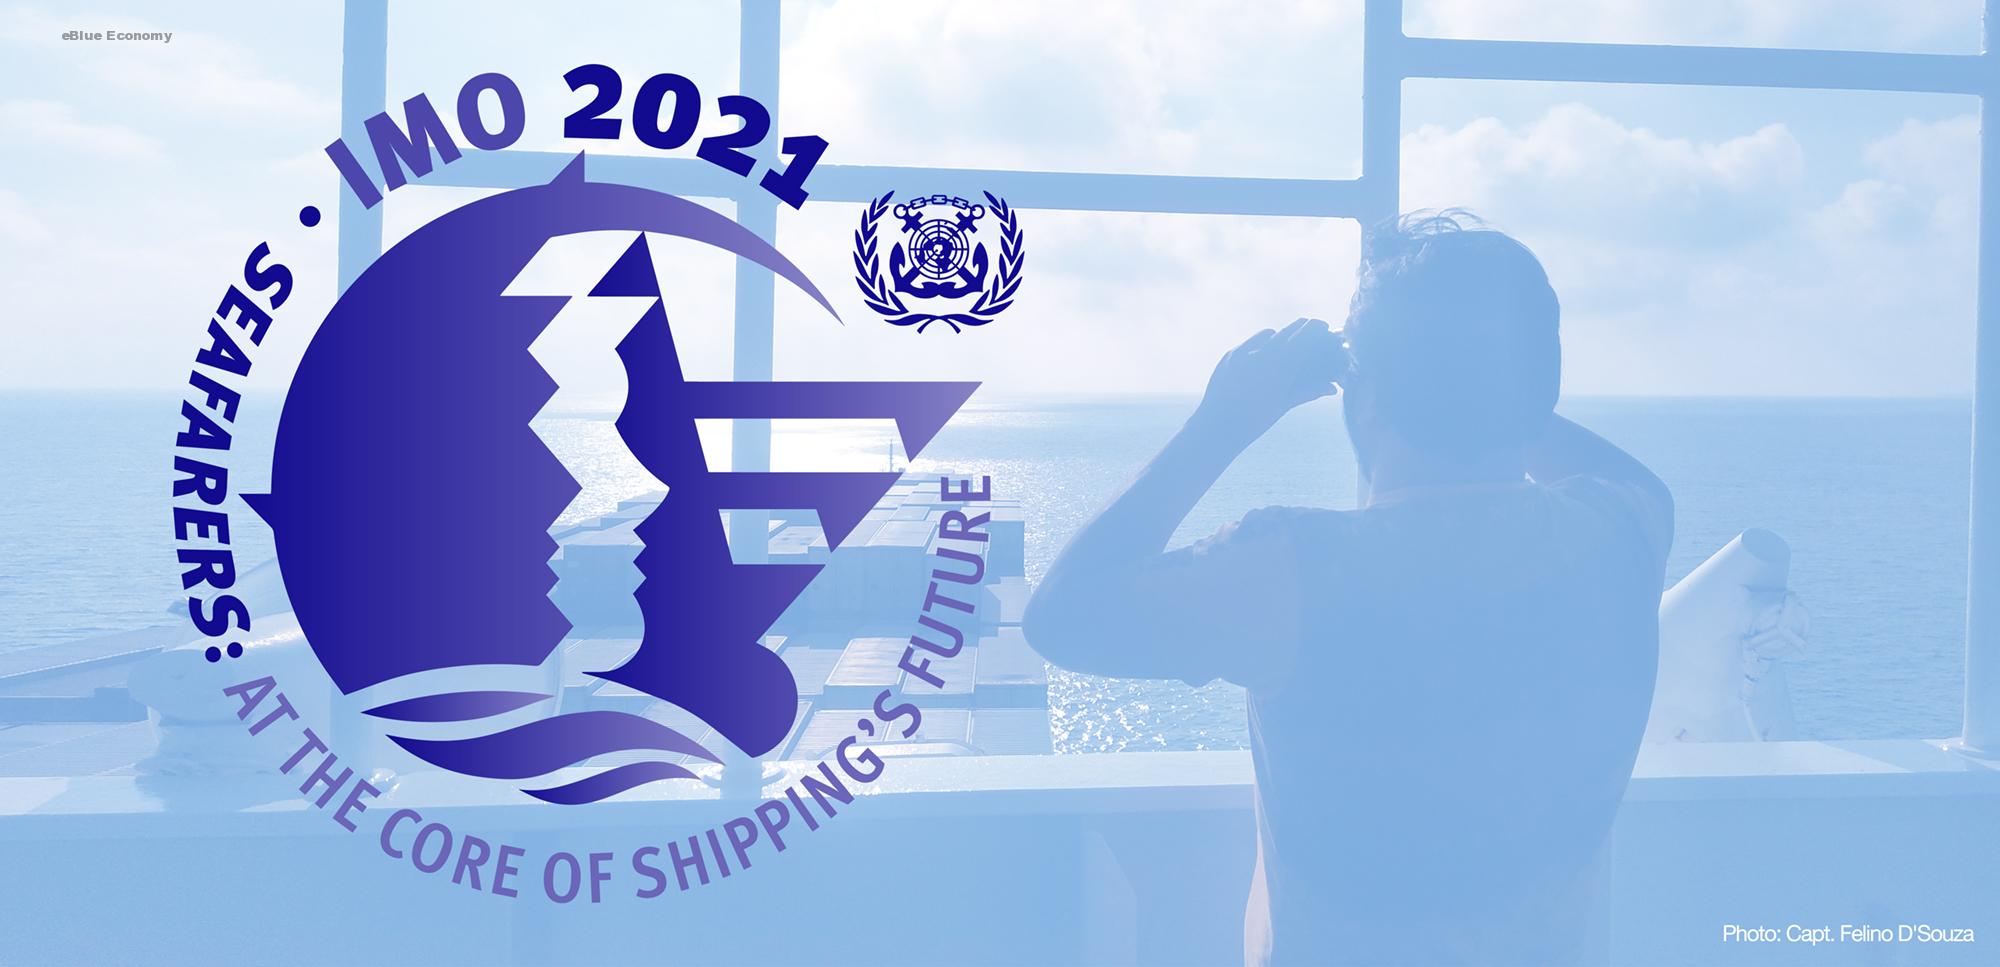 eBlue_economy_Spotlighting the role of seafarers on World Maritime Day